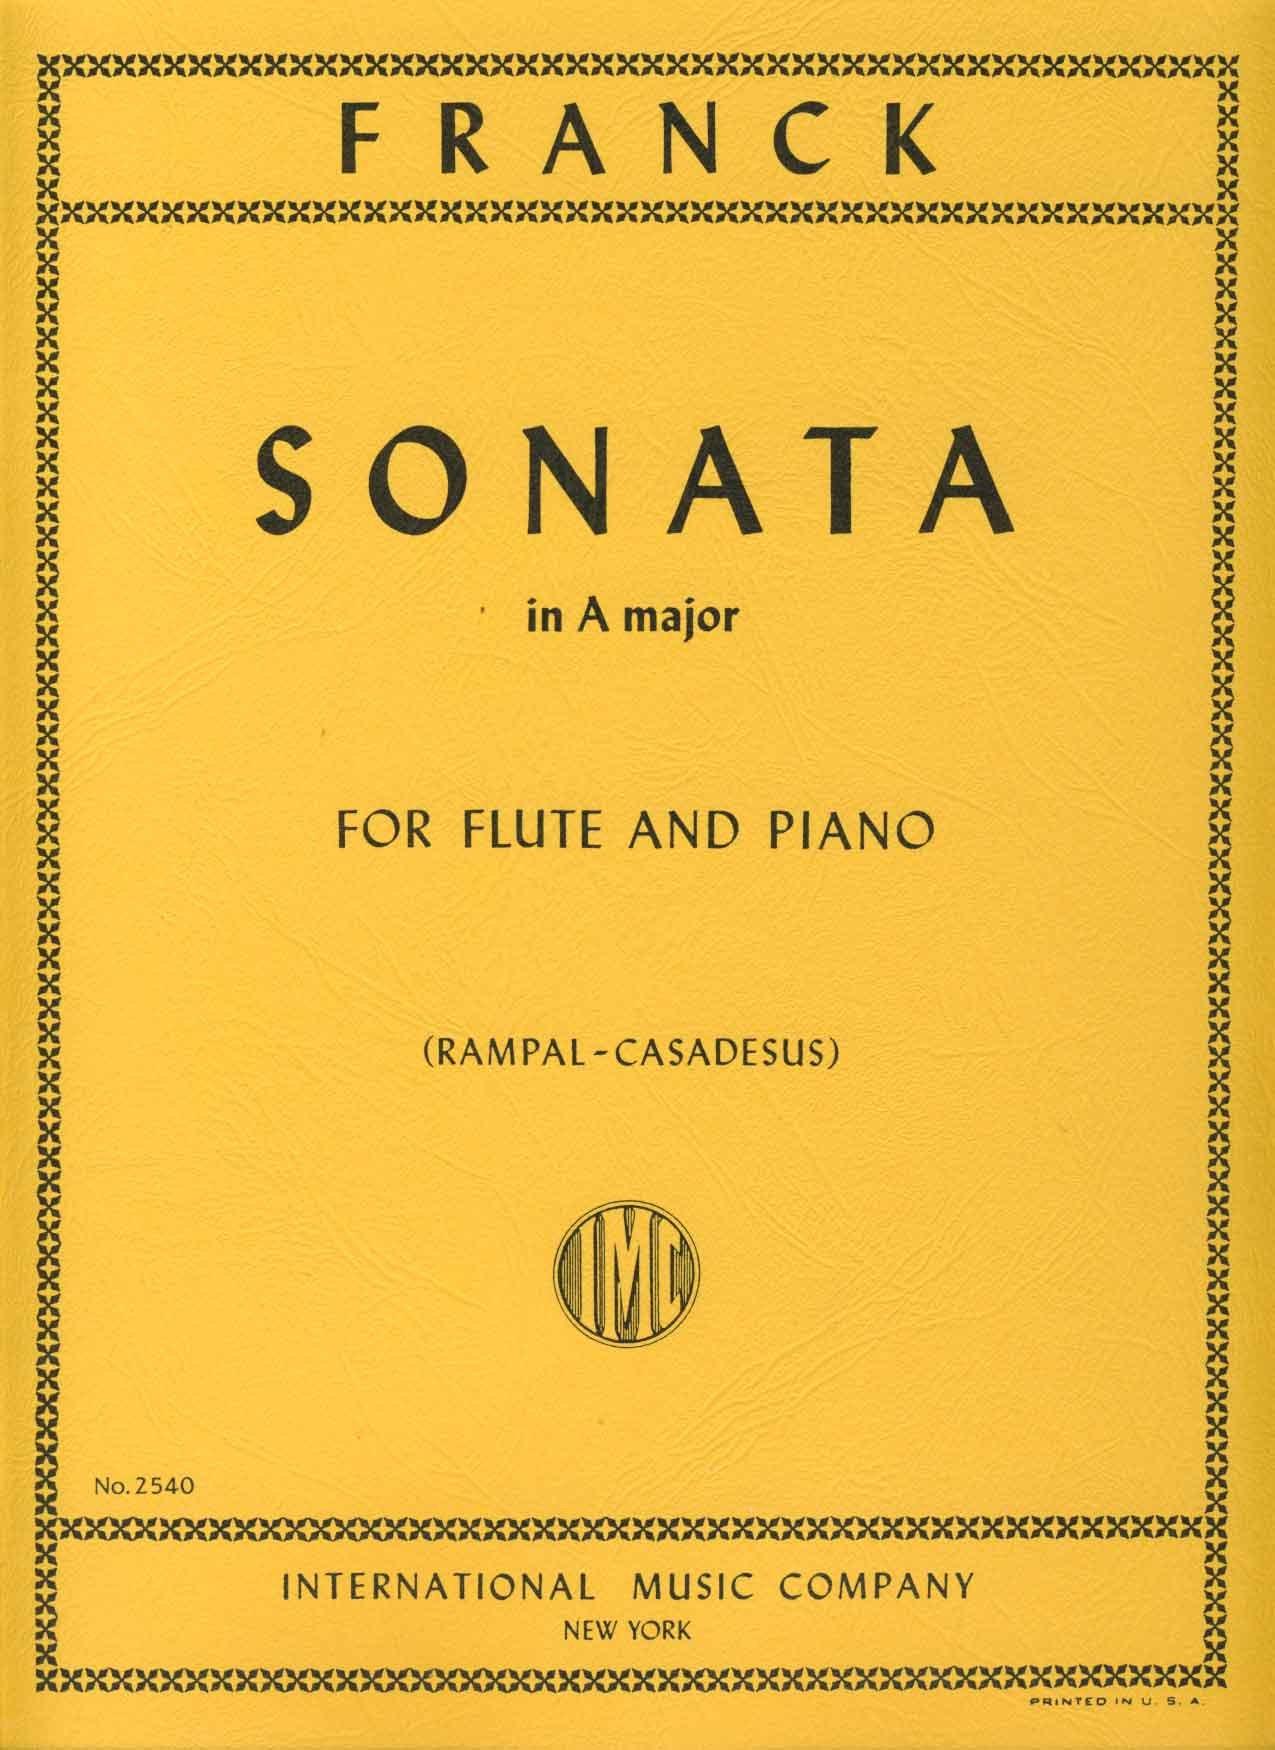 Sonata in A major (Rampal) - César Franck | Suono Flauti